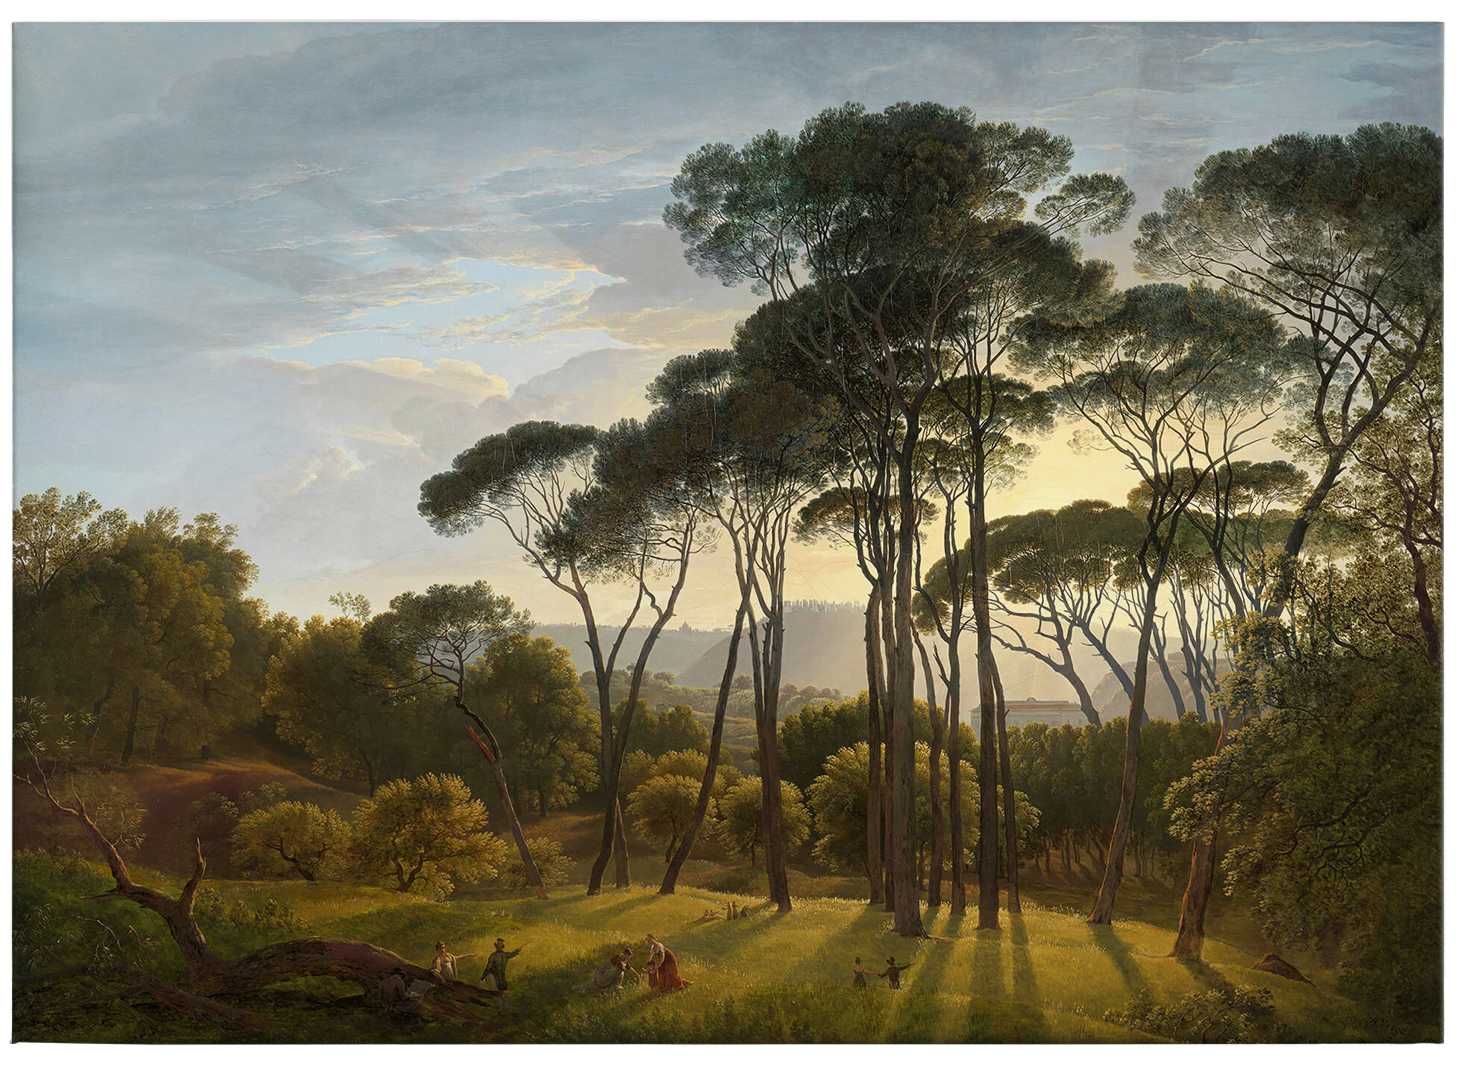             Canvas print Italian landscape by Voogd
        